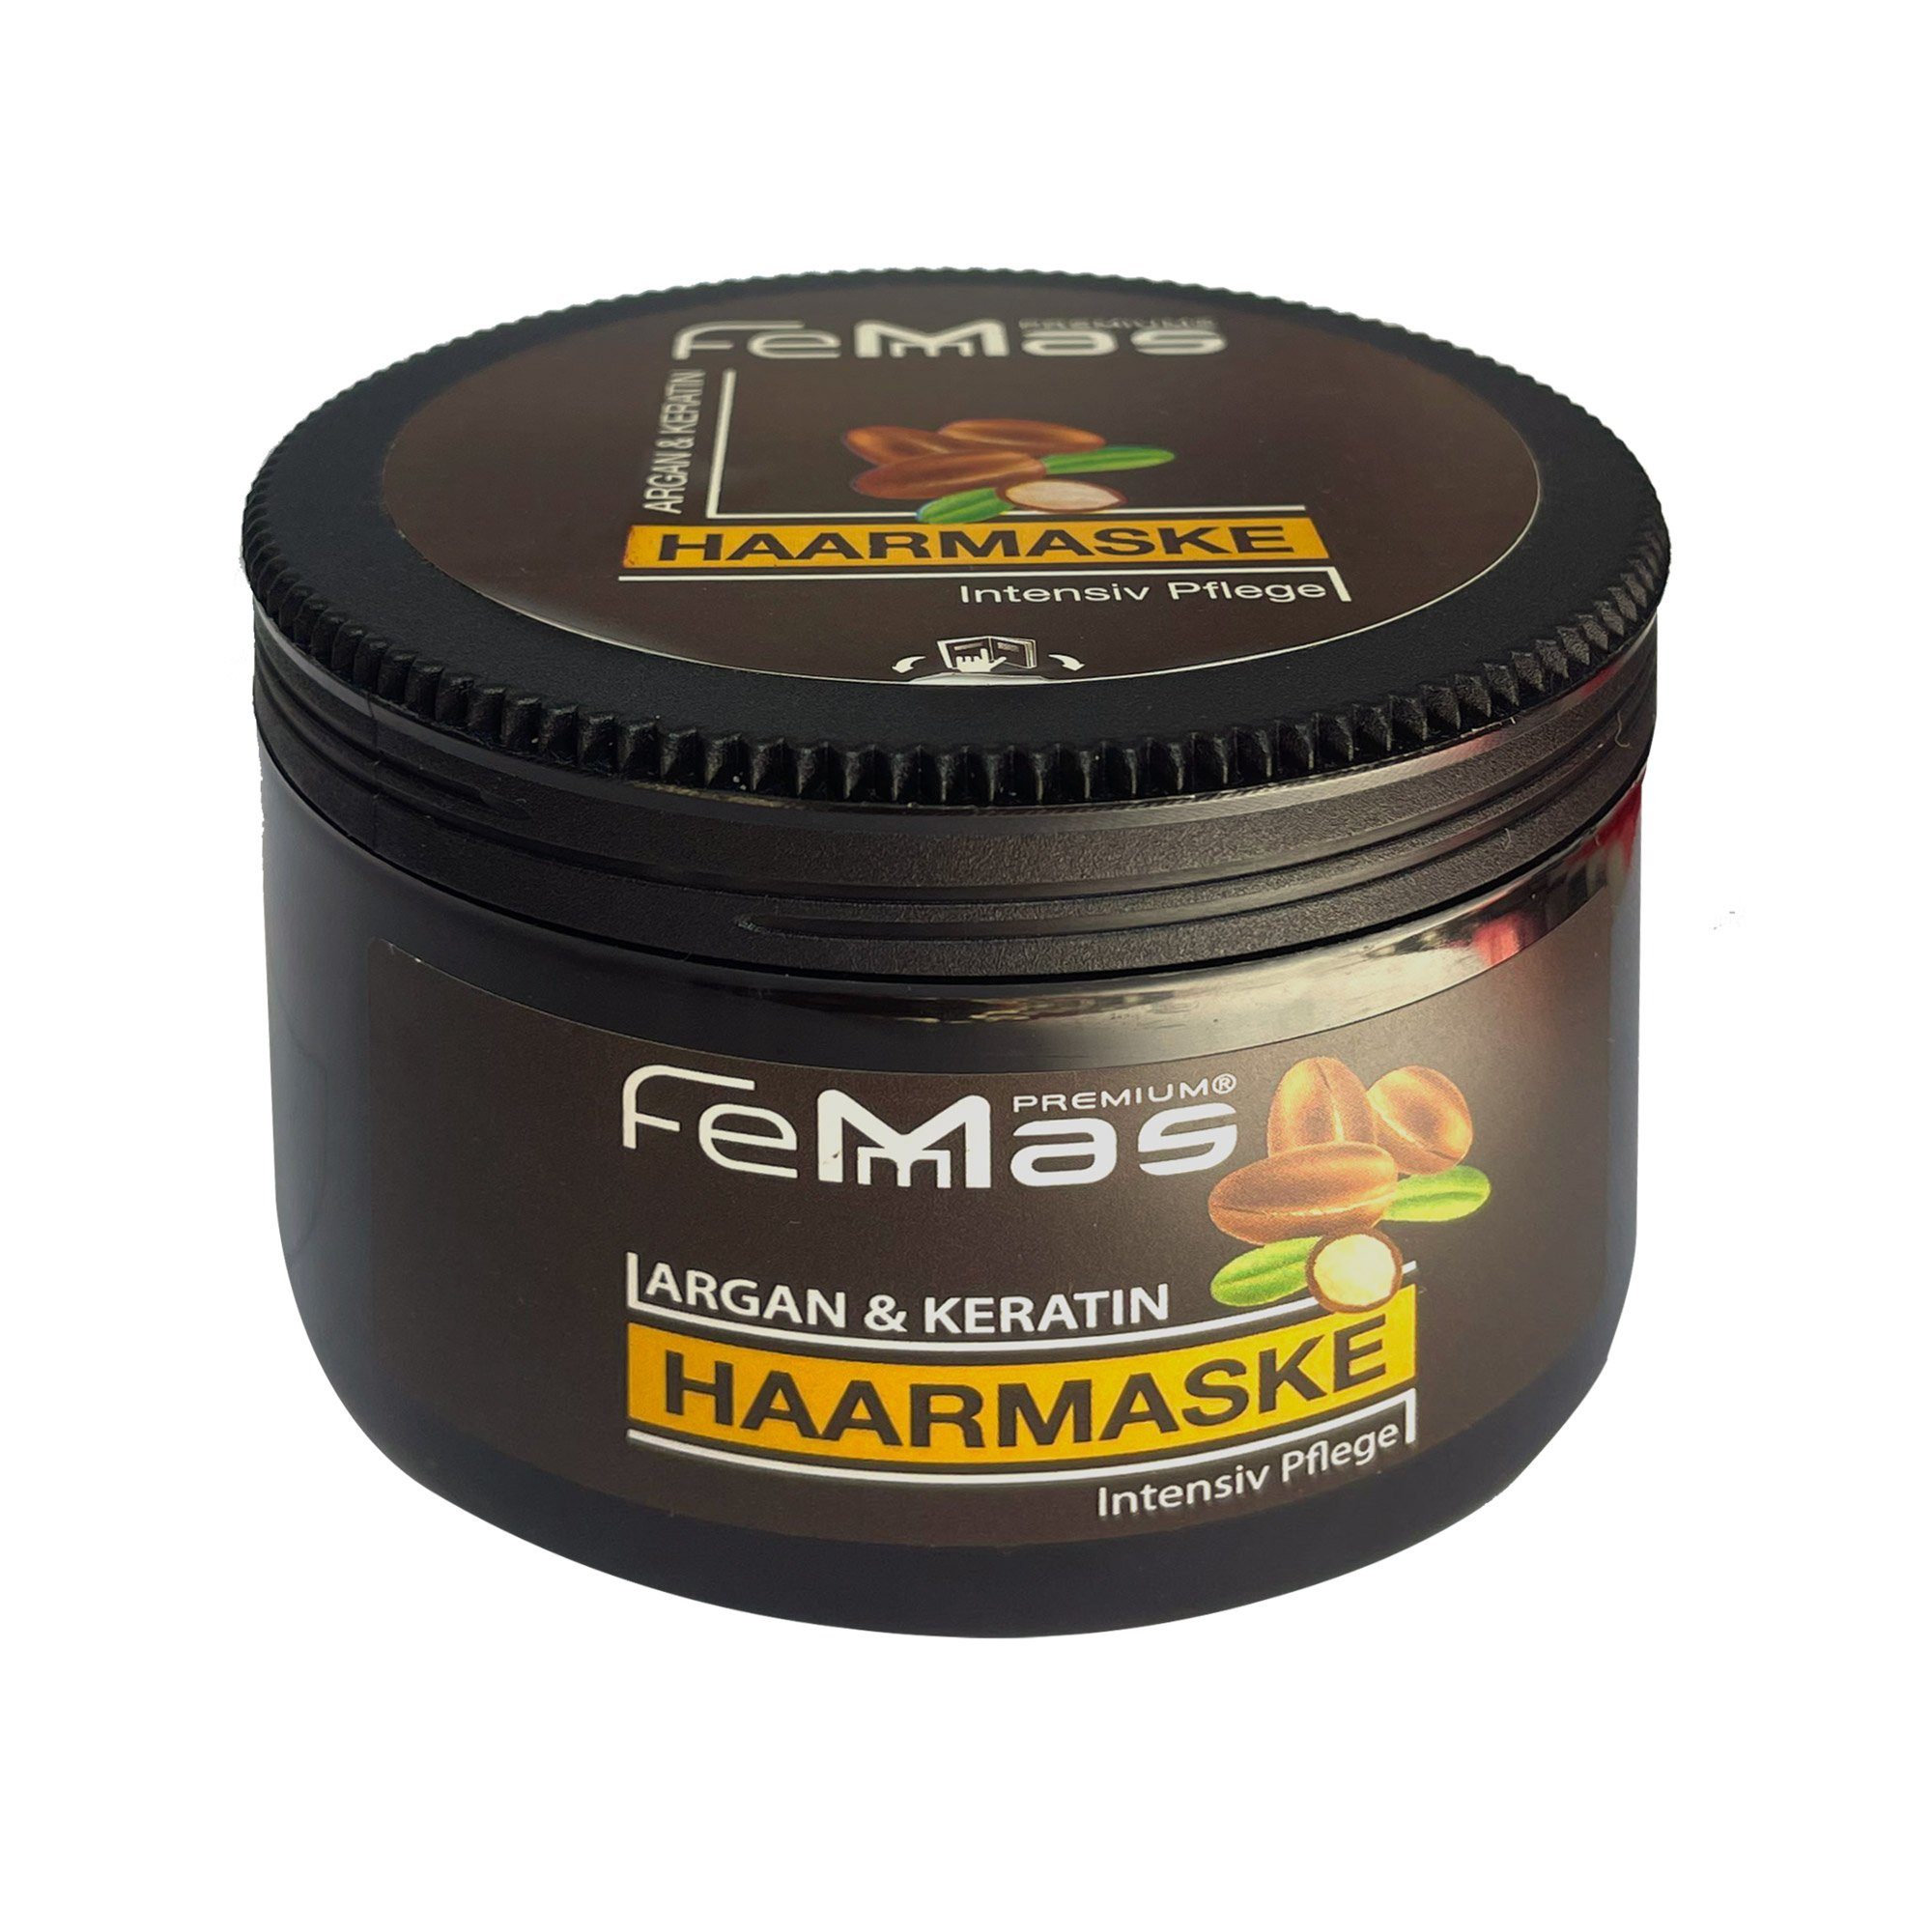 Femmas Premium Haarmaske FemMas Argan & Keratin Maske 300ml | Haarmasken